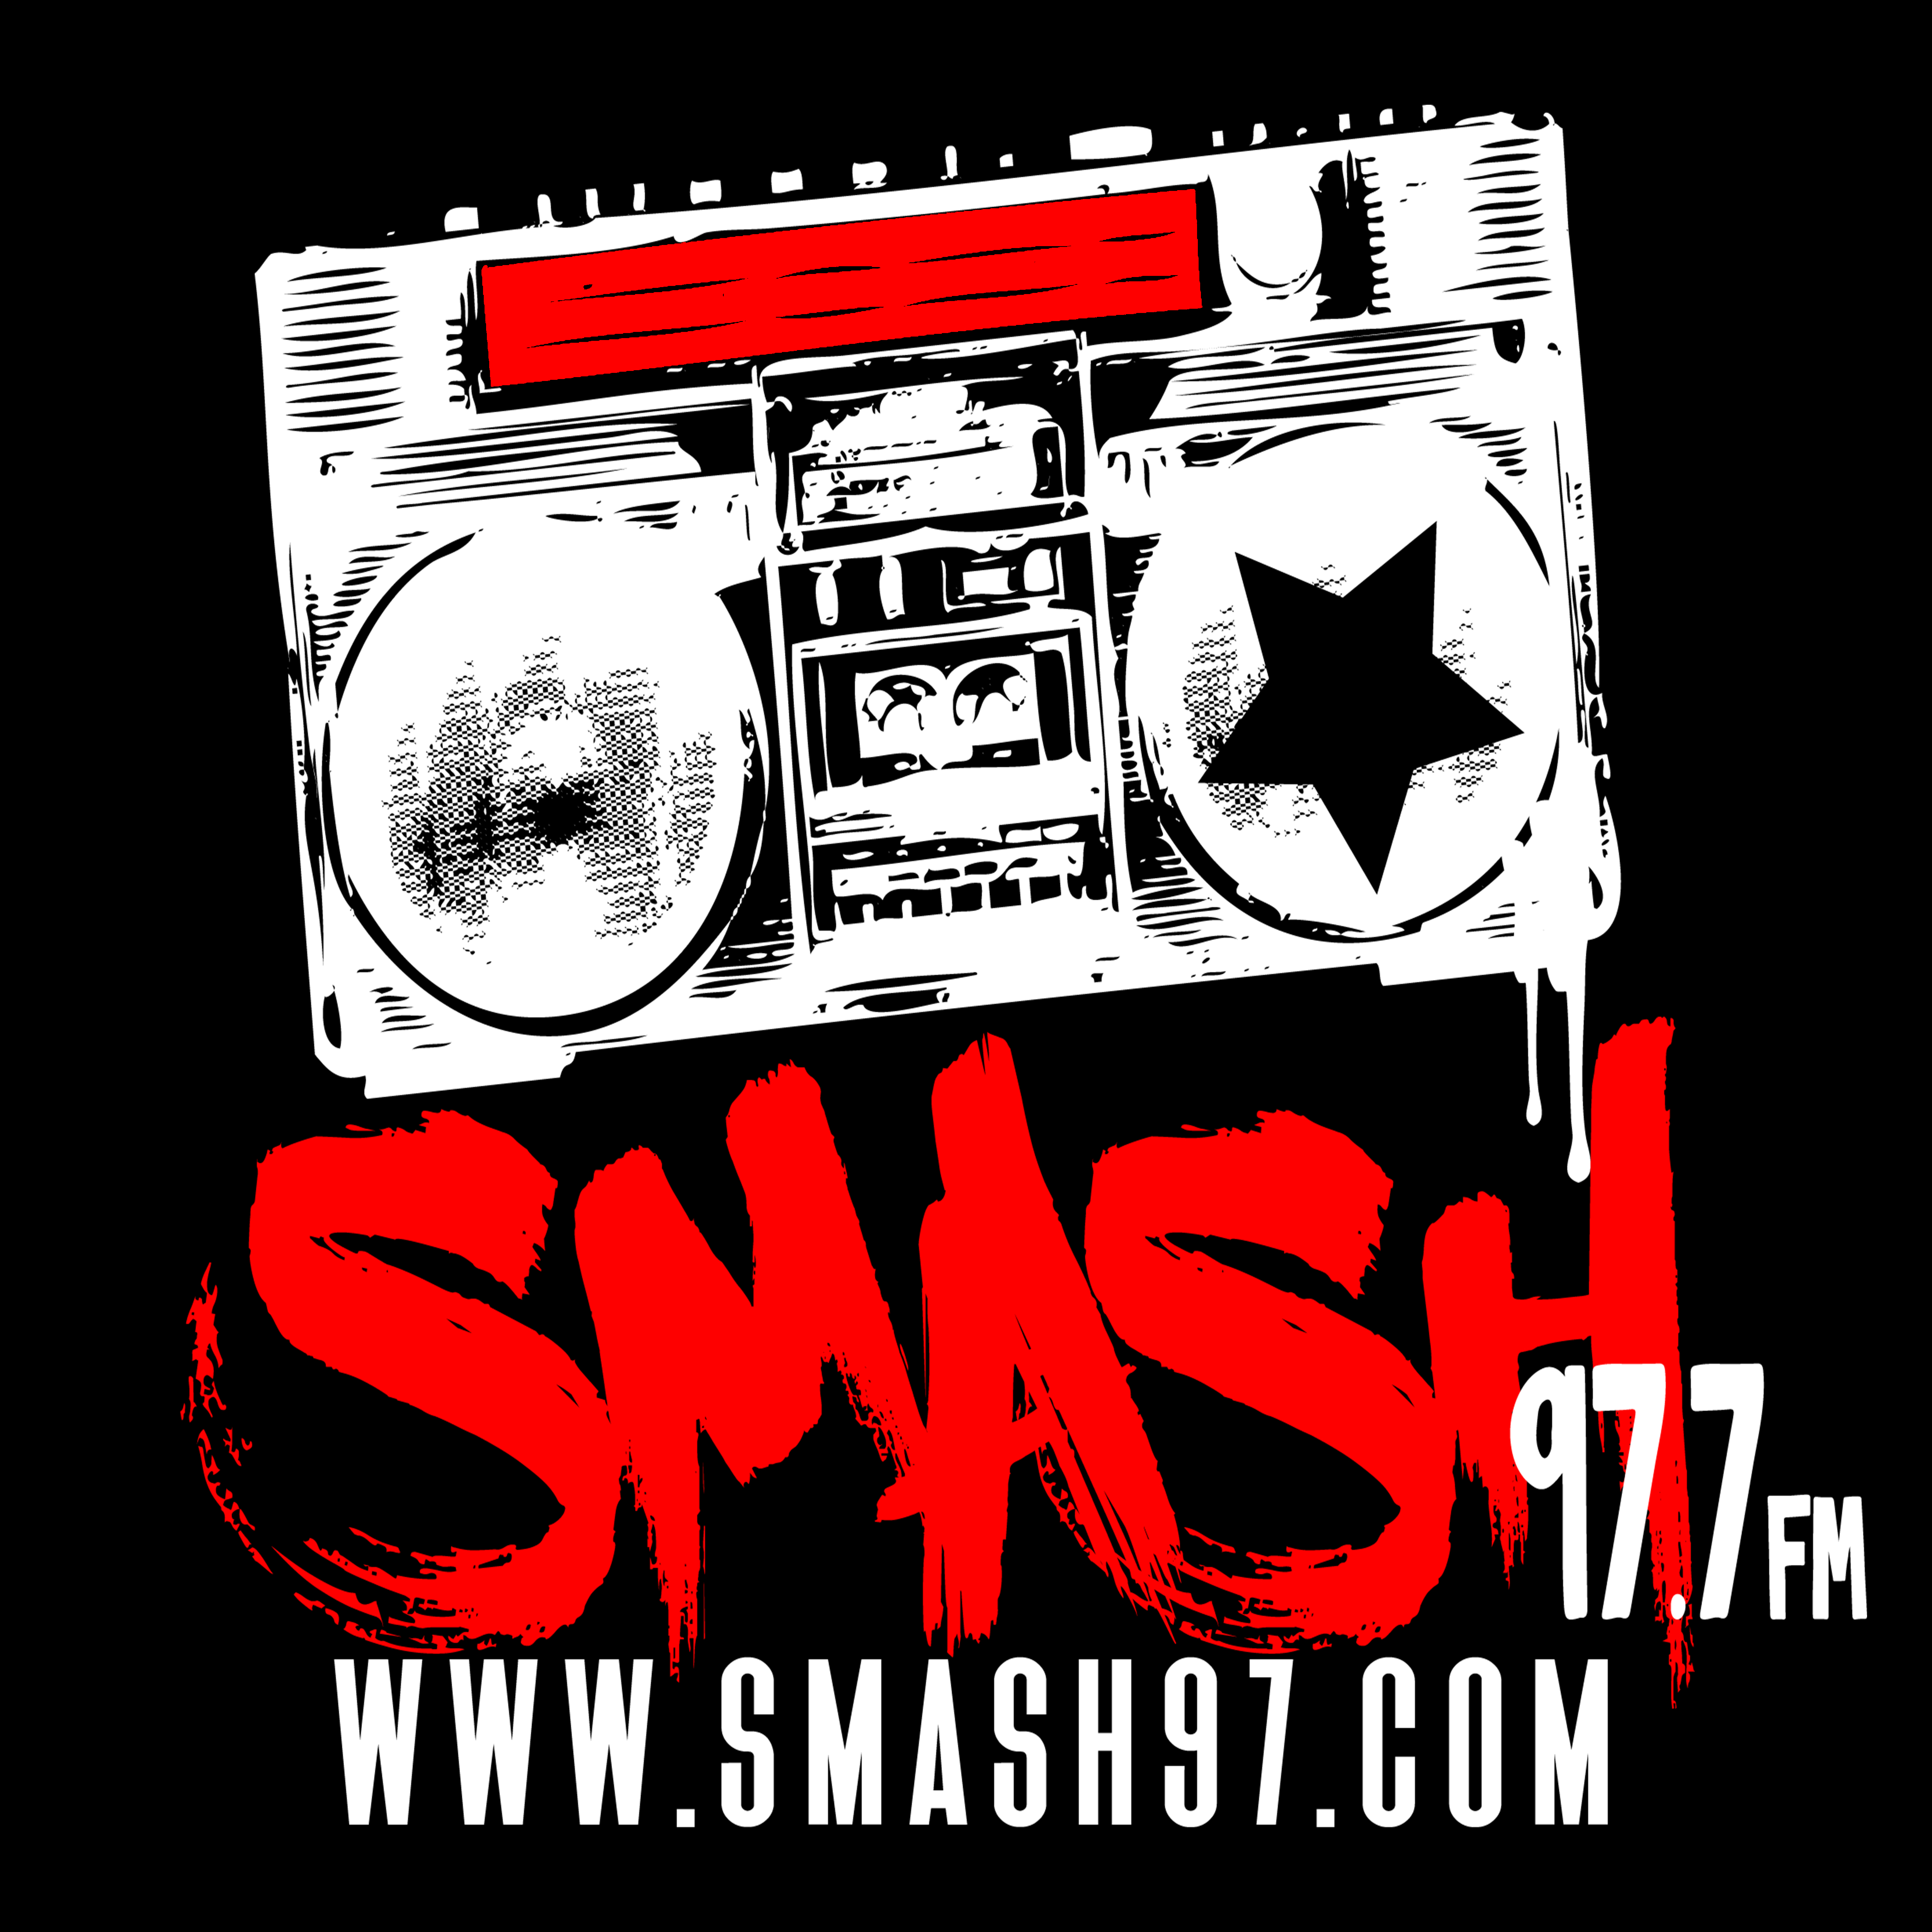 SMASH97.7FM